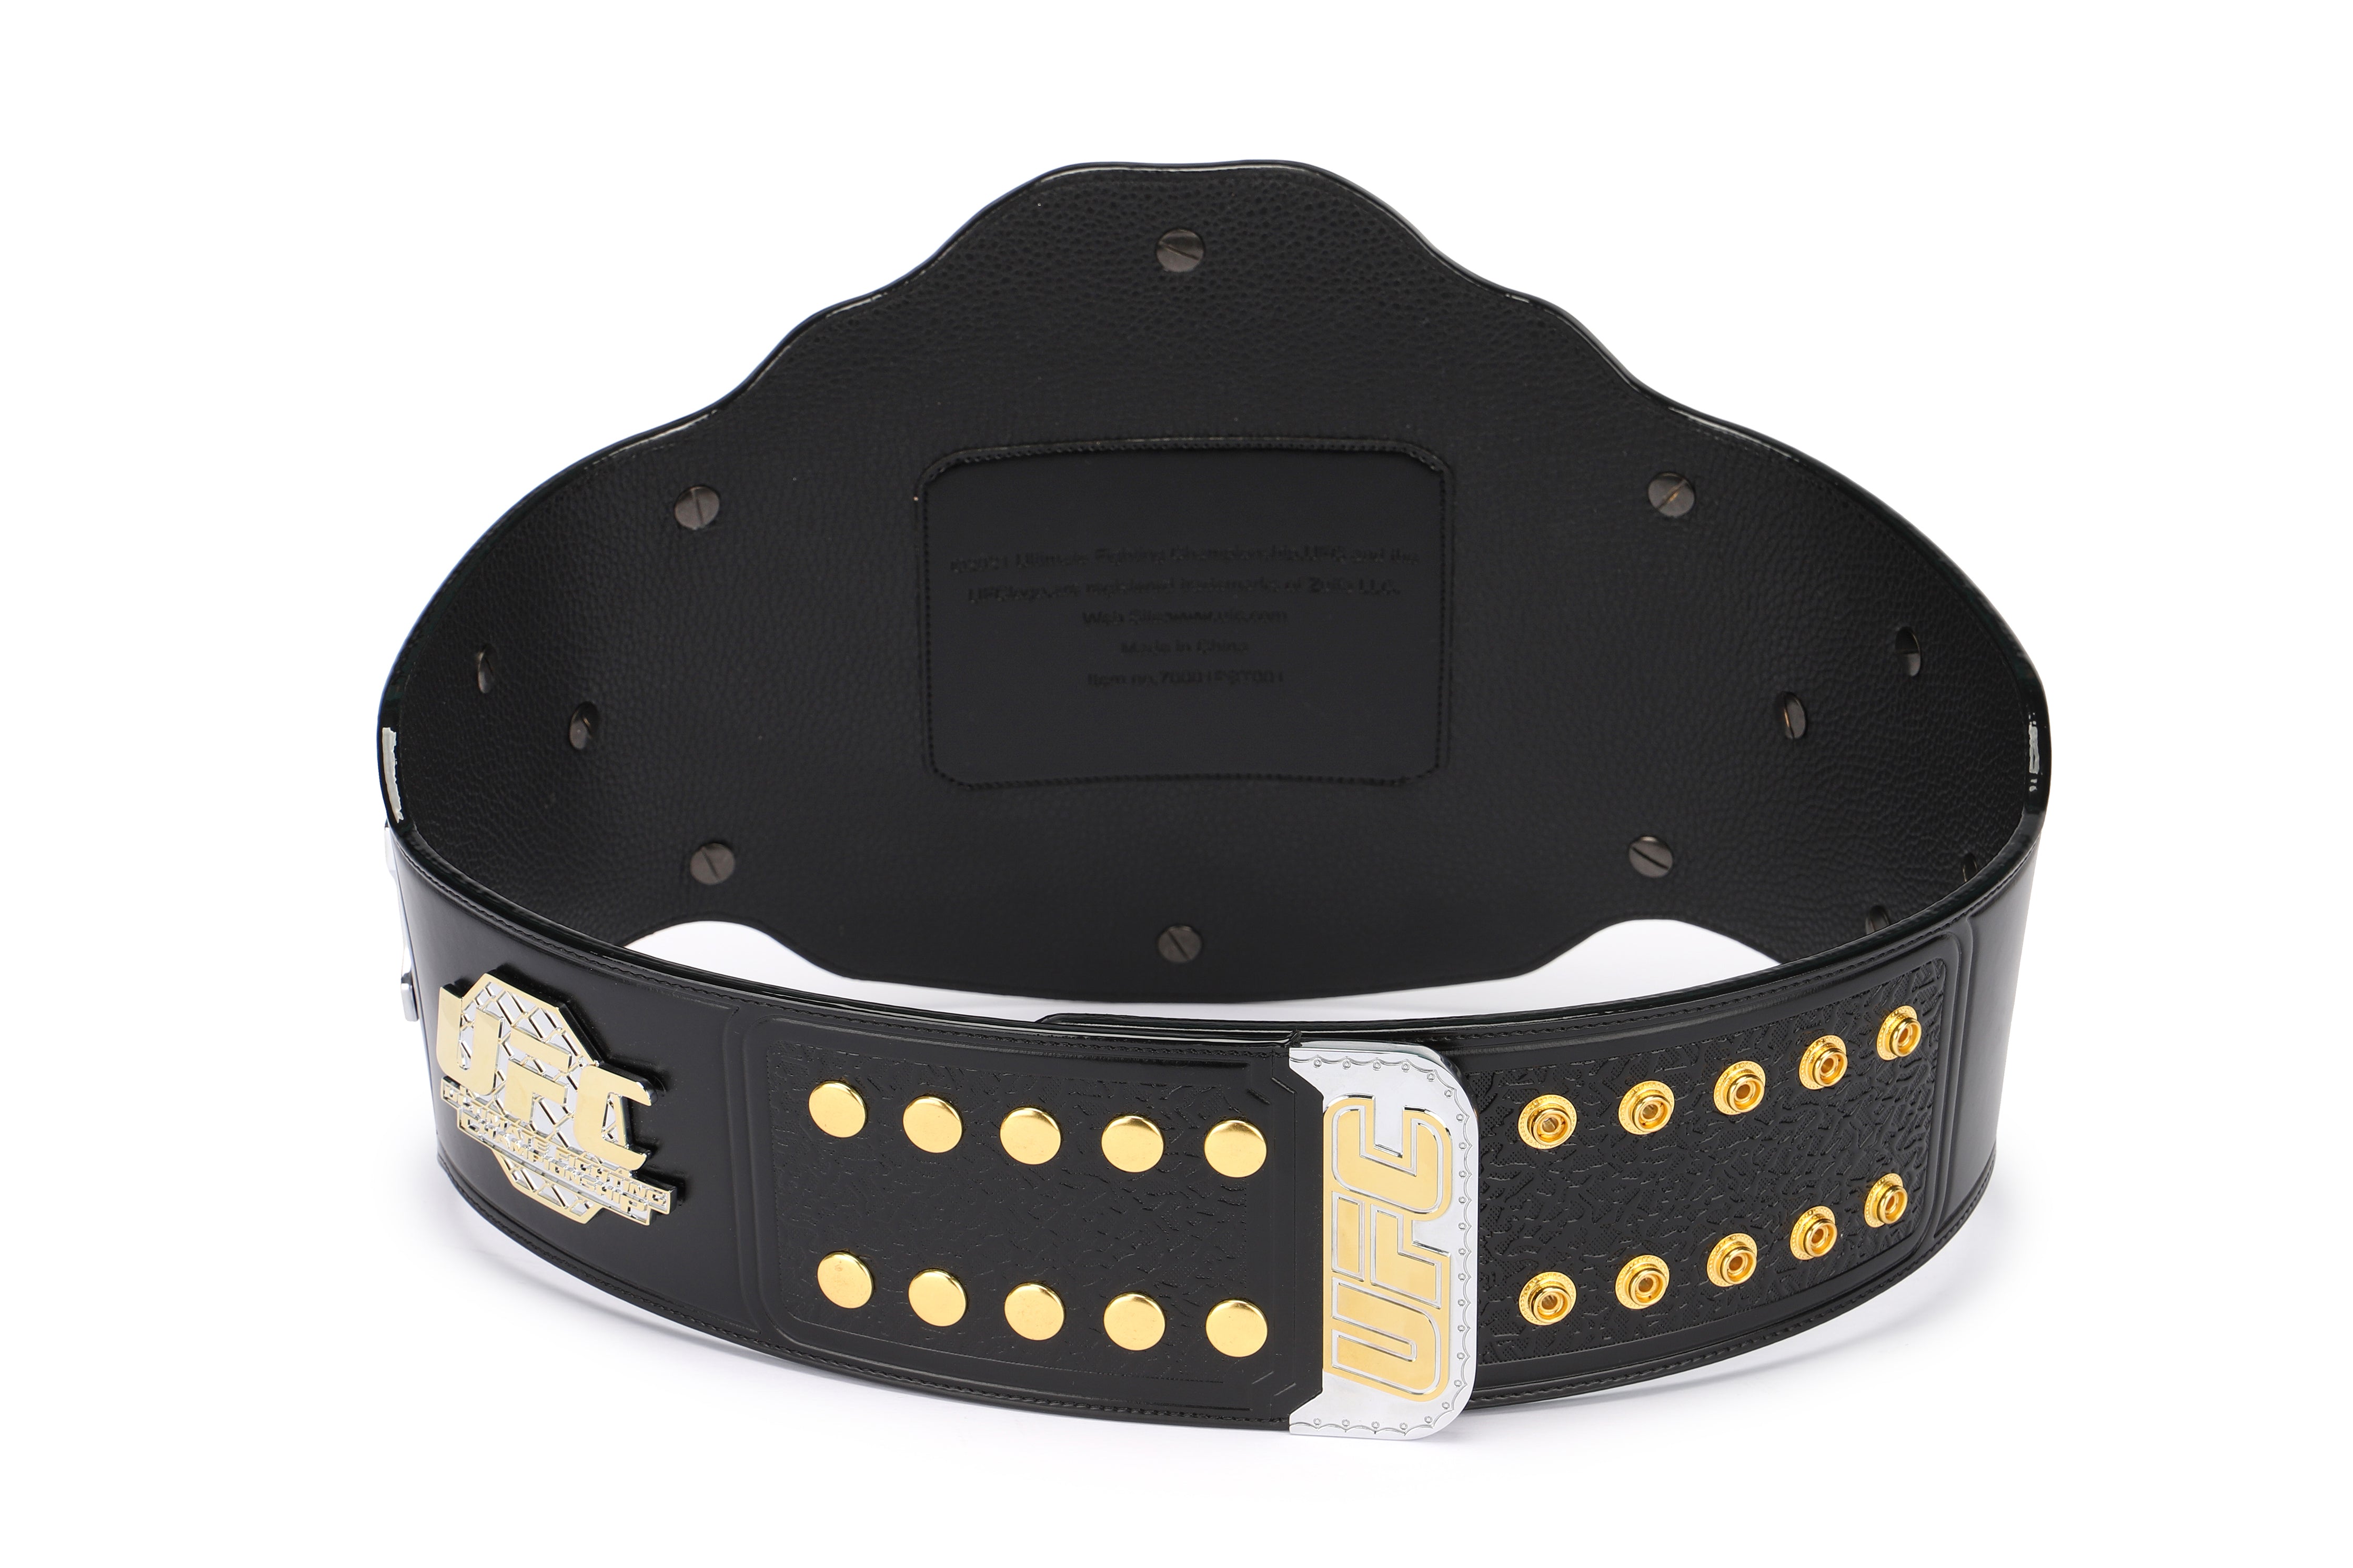 UFC Gifts - Replica Championship Belt